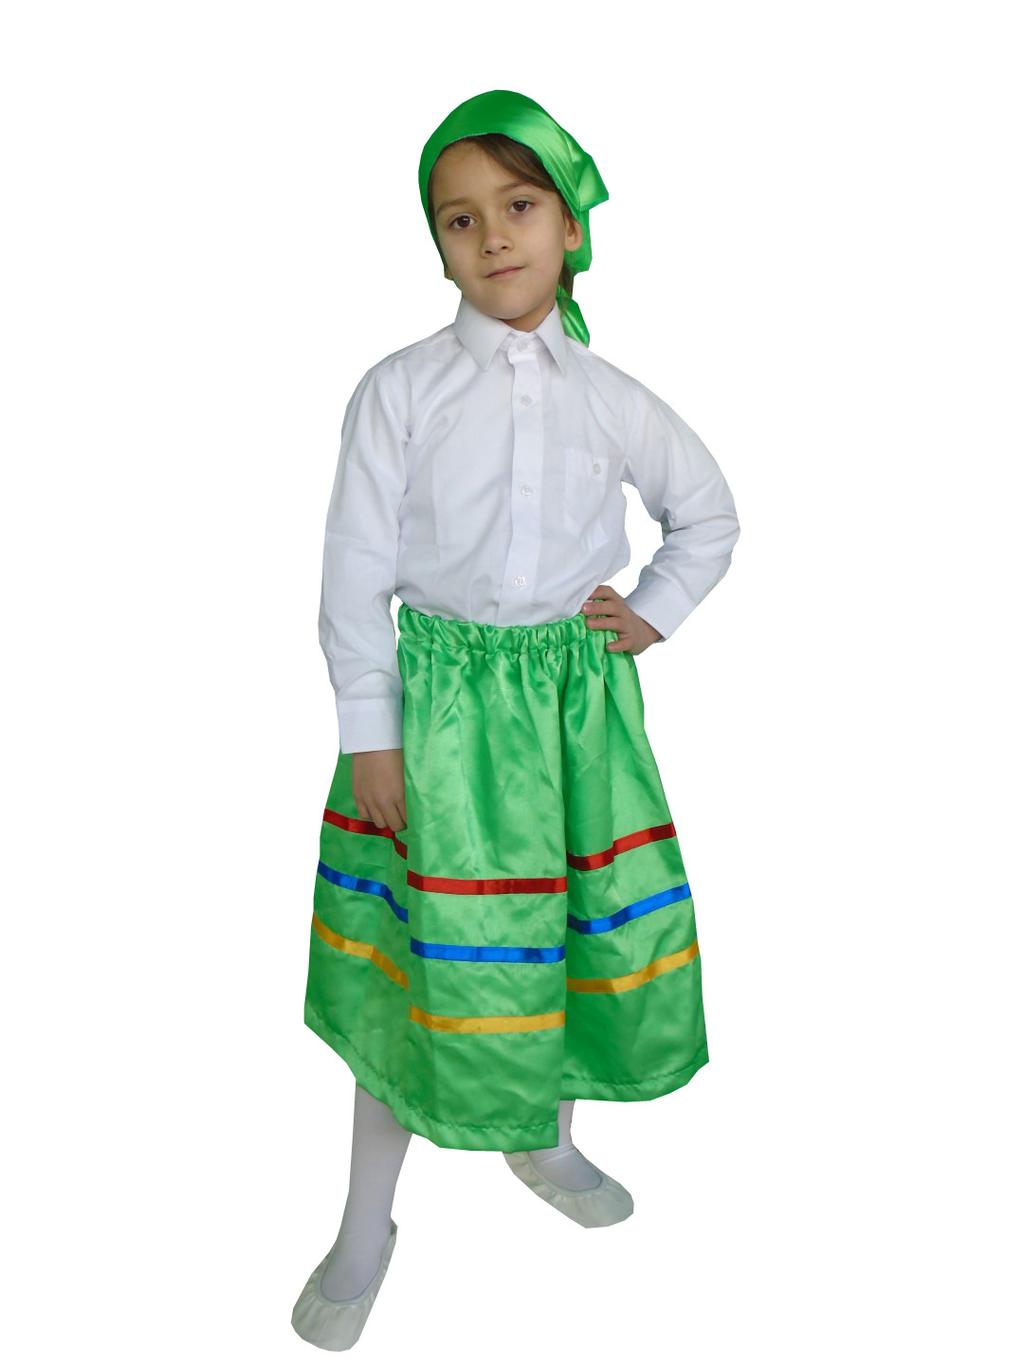 Pañuelo triangular del color de la falda (sujeto con pinches) Gorro nortino (chullo) Blusa blanca Camisa verde flúor (dentro del pantalón) Chaqueta negra